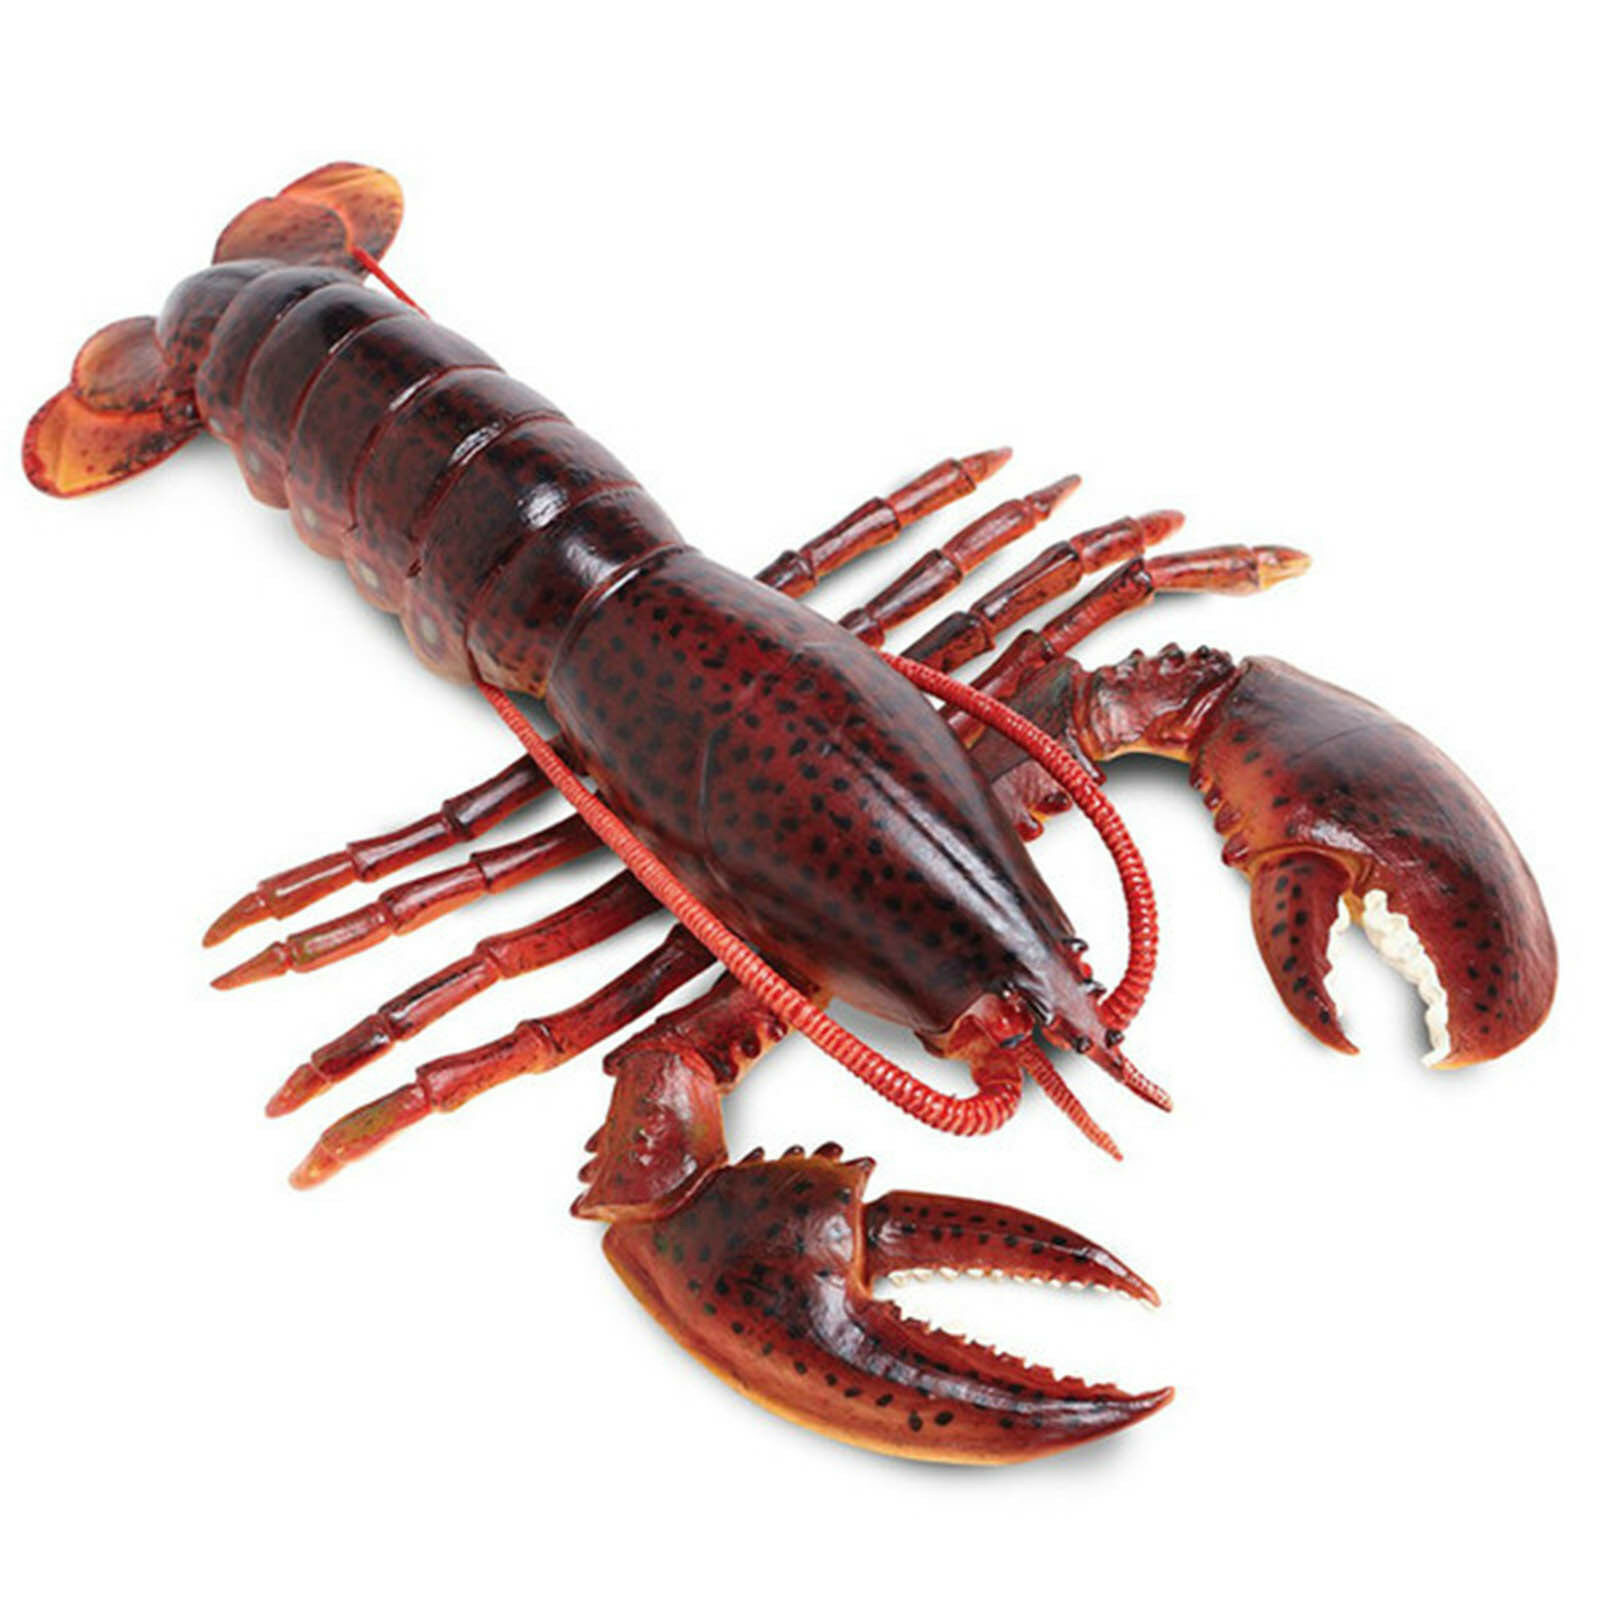 Maine Lobster Incredible Creatures Figure Safari Ltd New Toys Educational